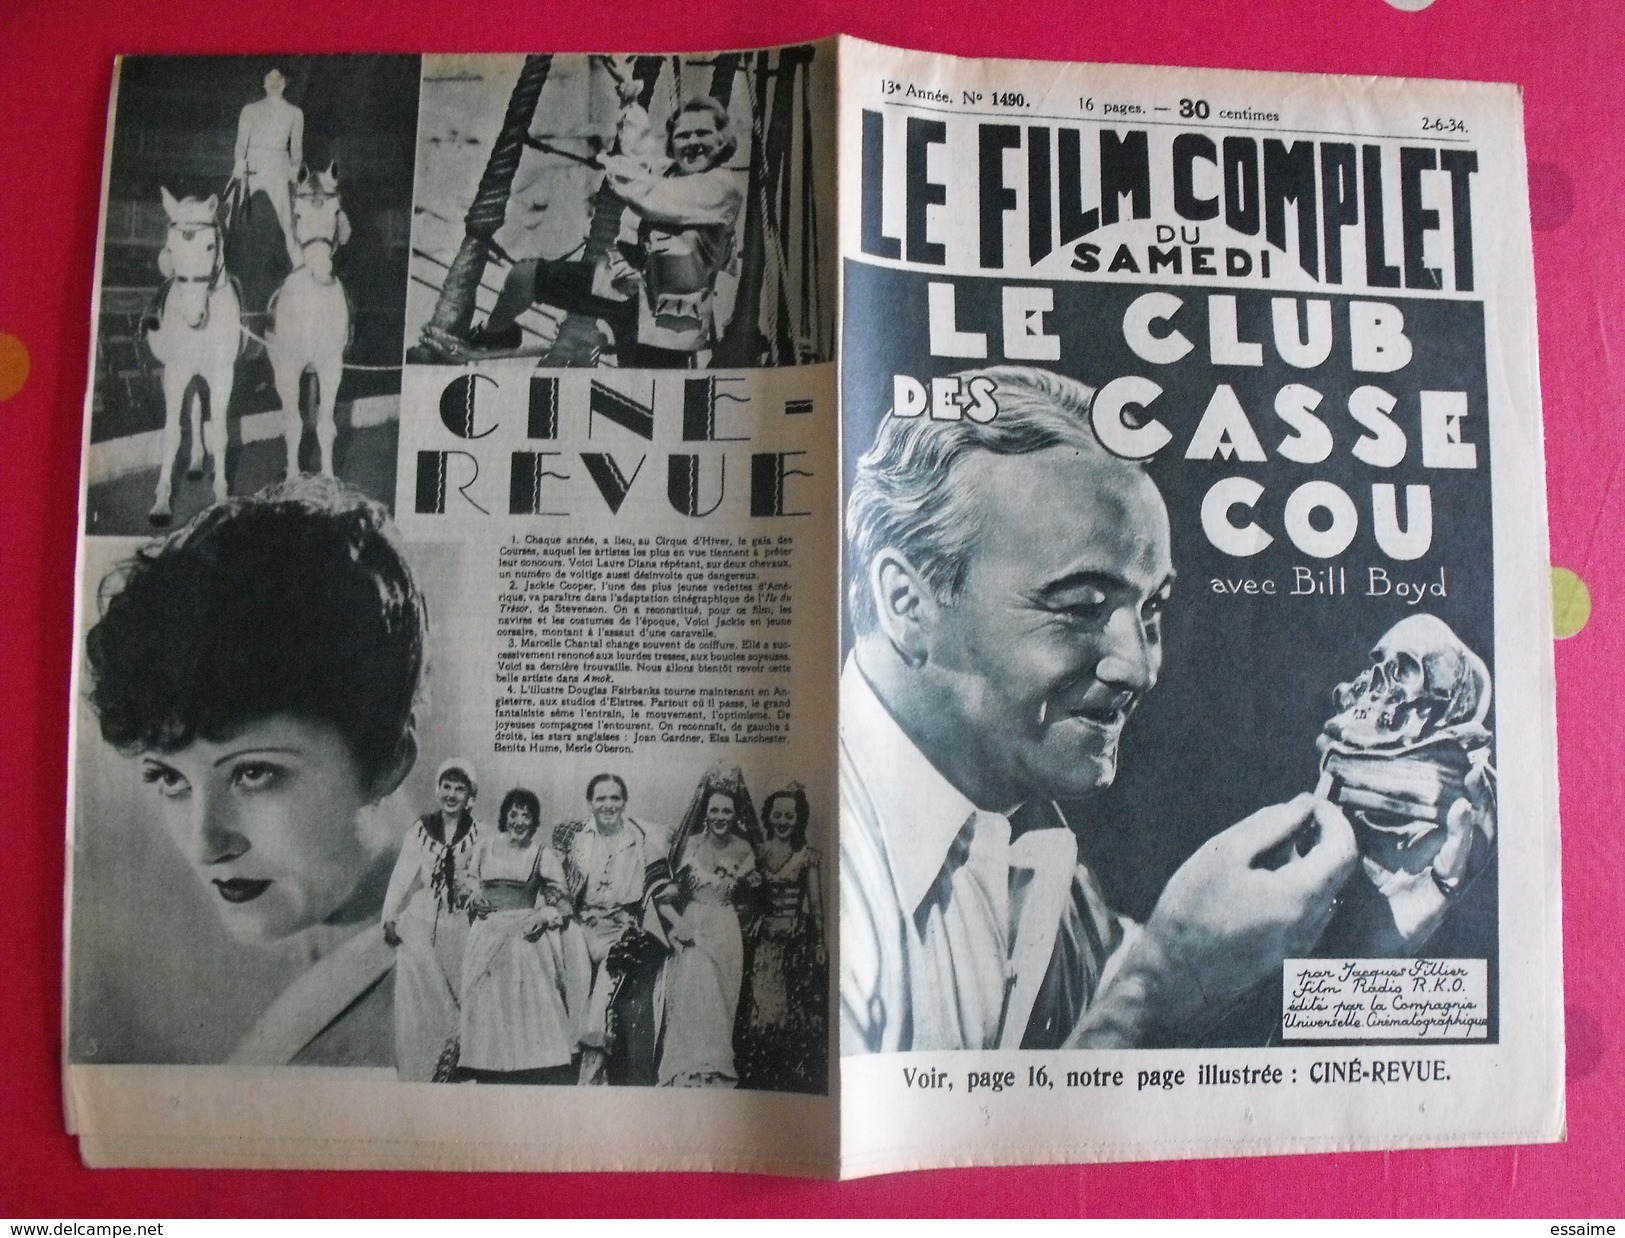 10 revues "le film complet" 1934. douglas fairbanks nancy carroll jean murat liane haid florelle harry baur mary astor